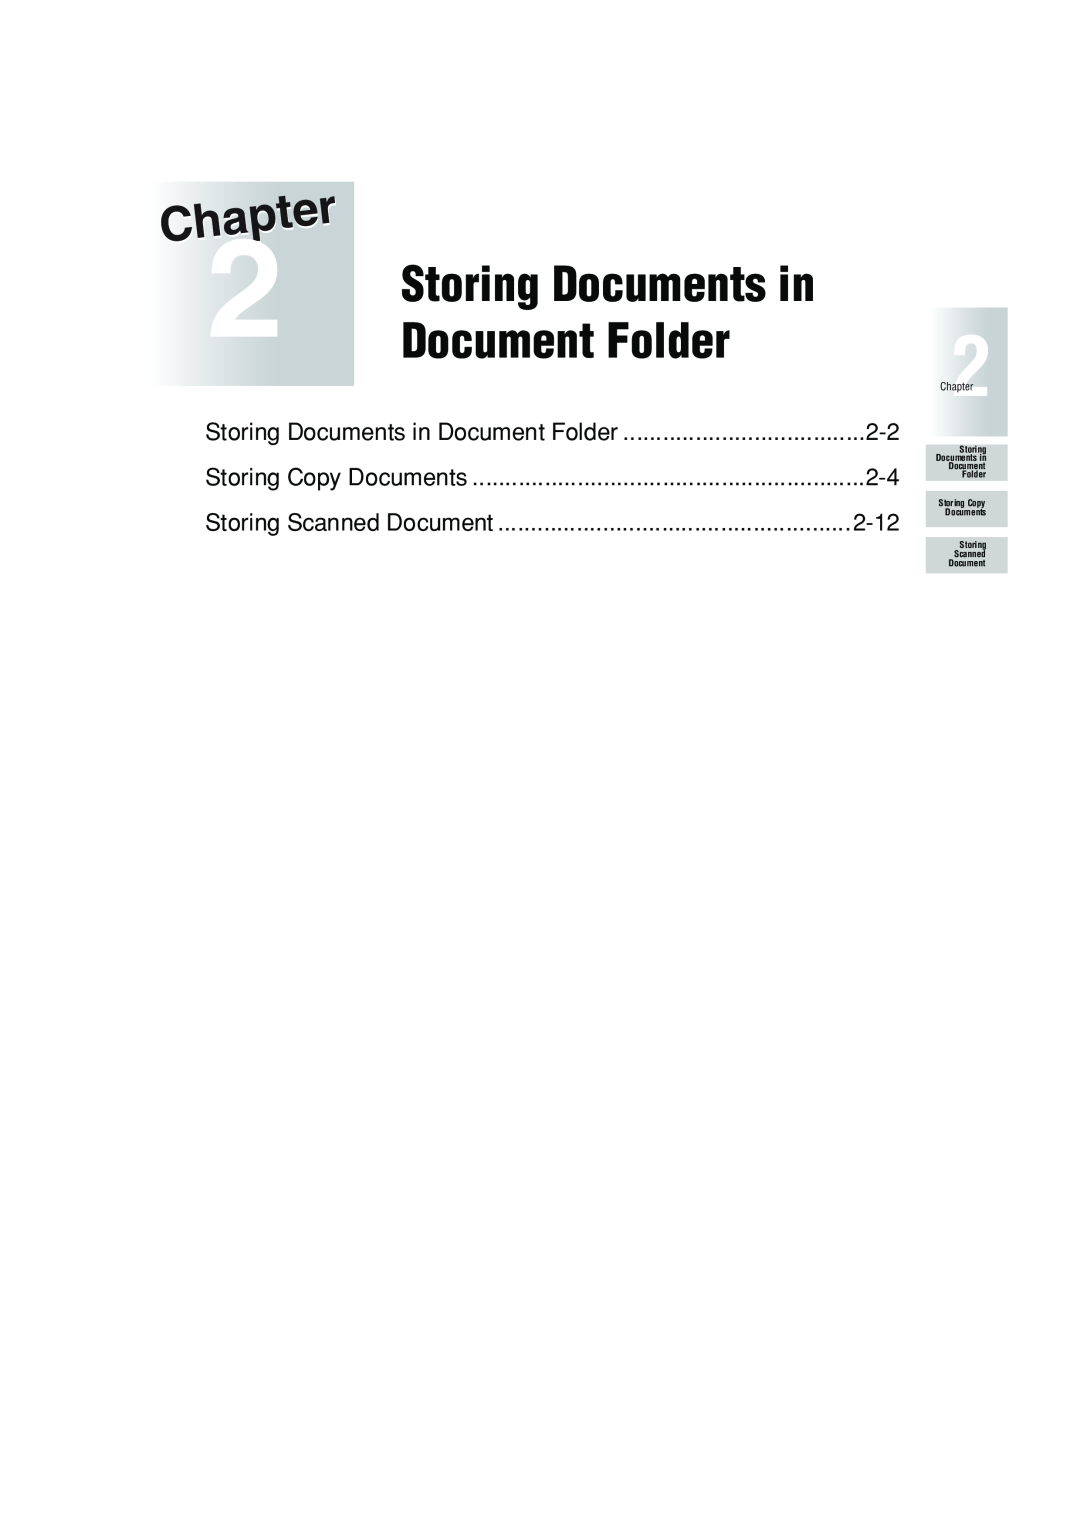 Konica Minolta 7222 manual Storing Scanned Document, 2-12, Storing Documents in Document Folder, Storing Copy Documents 